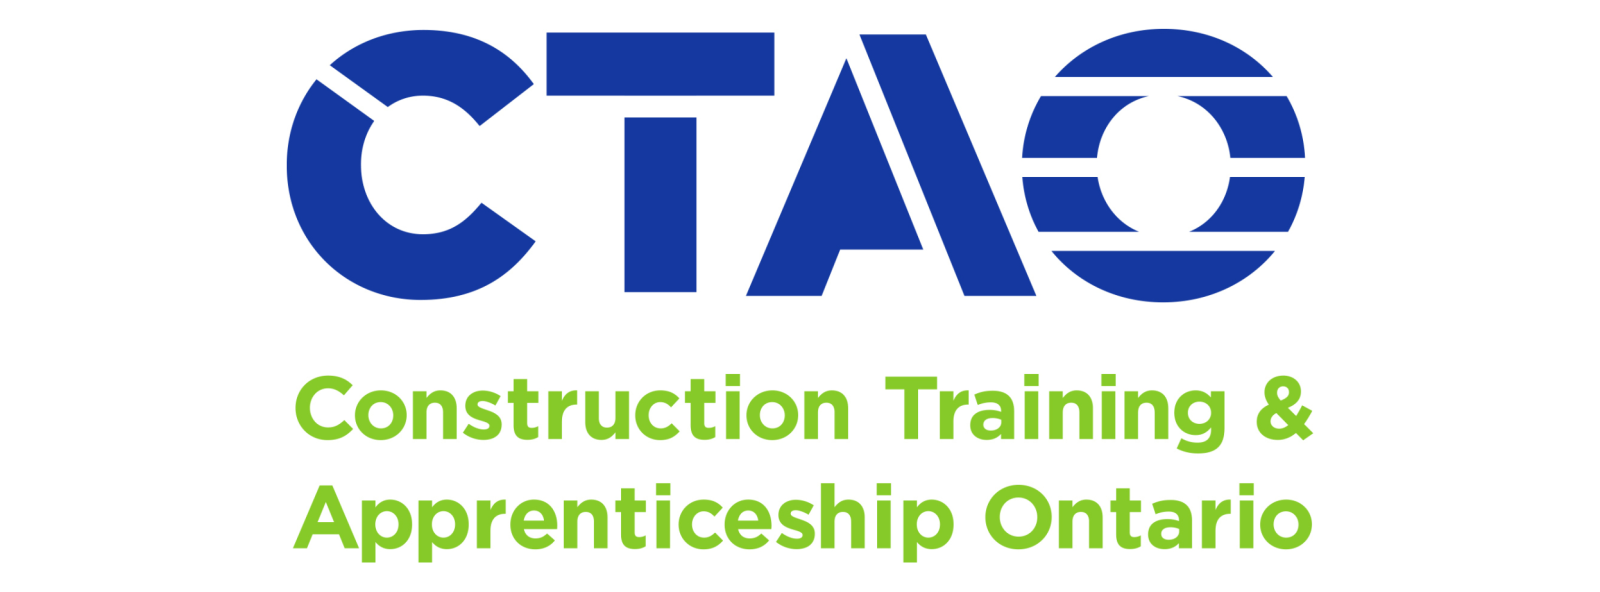 Construction Training & Apprenticeship Ontario (CTAO)